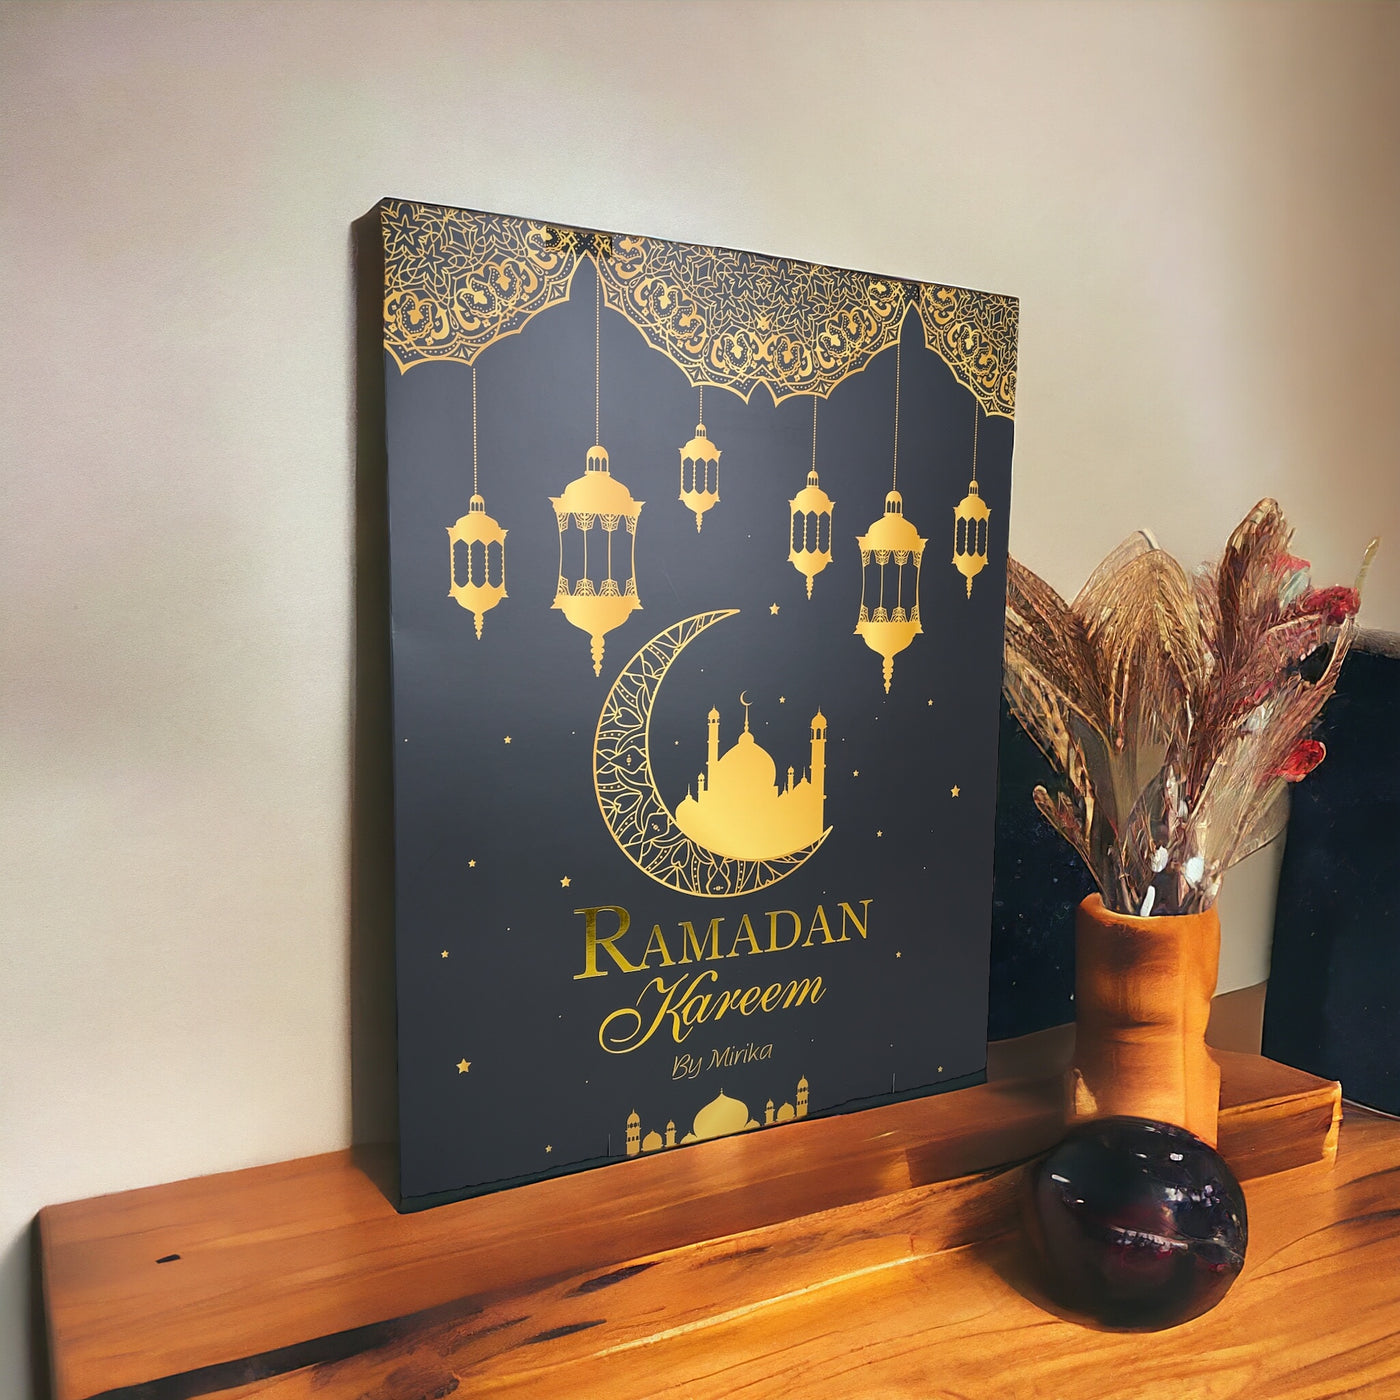 Calendrier De Ramadan Pour Enfant, Édition Ramadan, Calendrier Coton